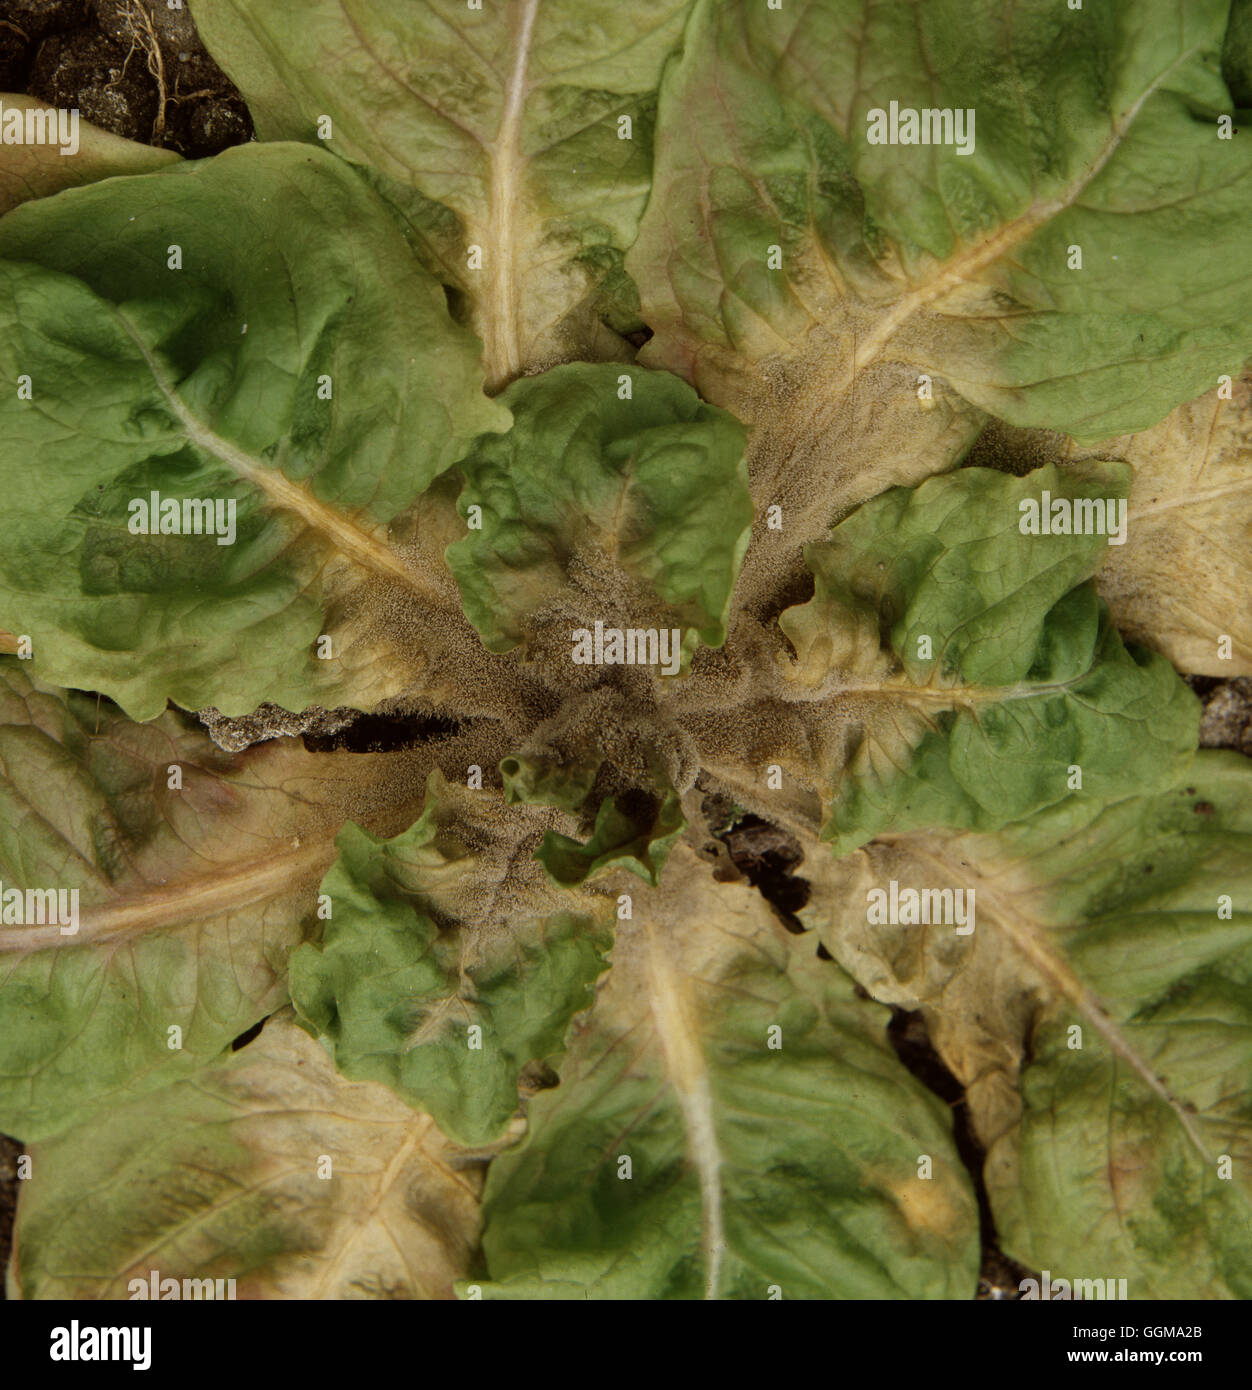 Botrytis cinerea - Grey Mould - on Lettuce 'Kweik' Stock Photo